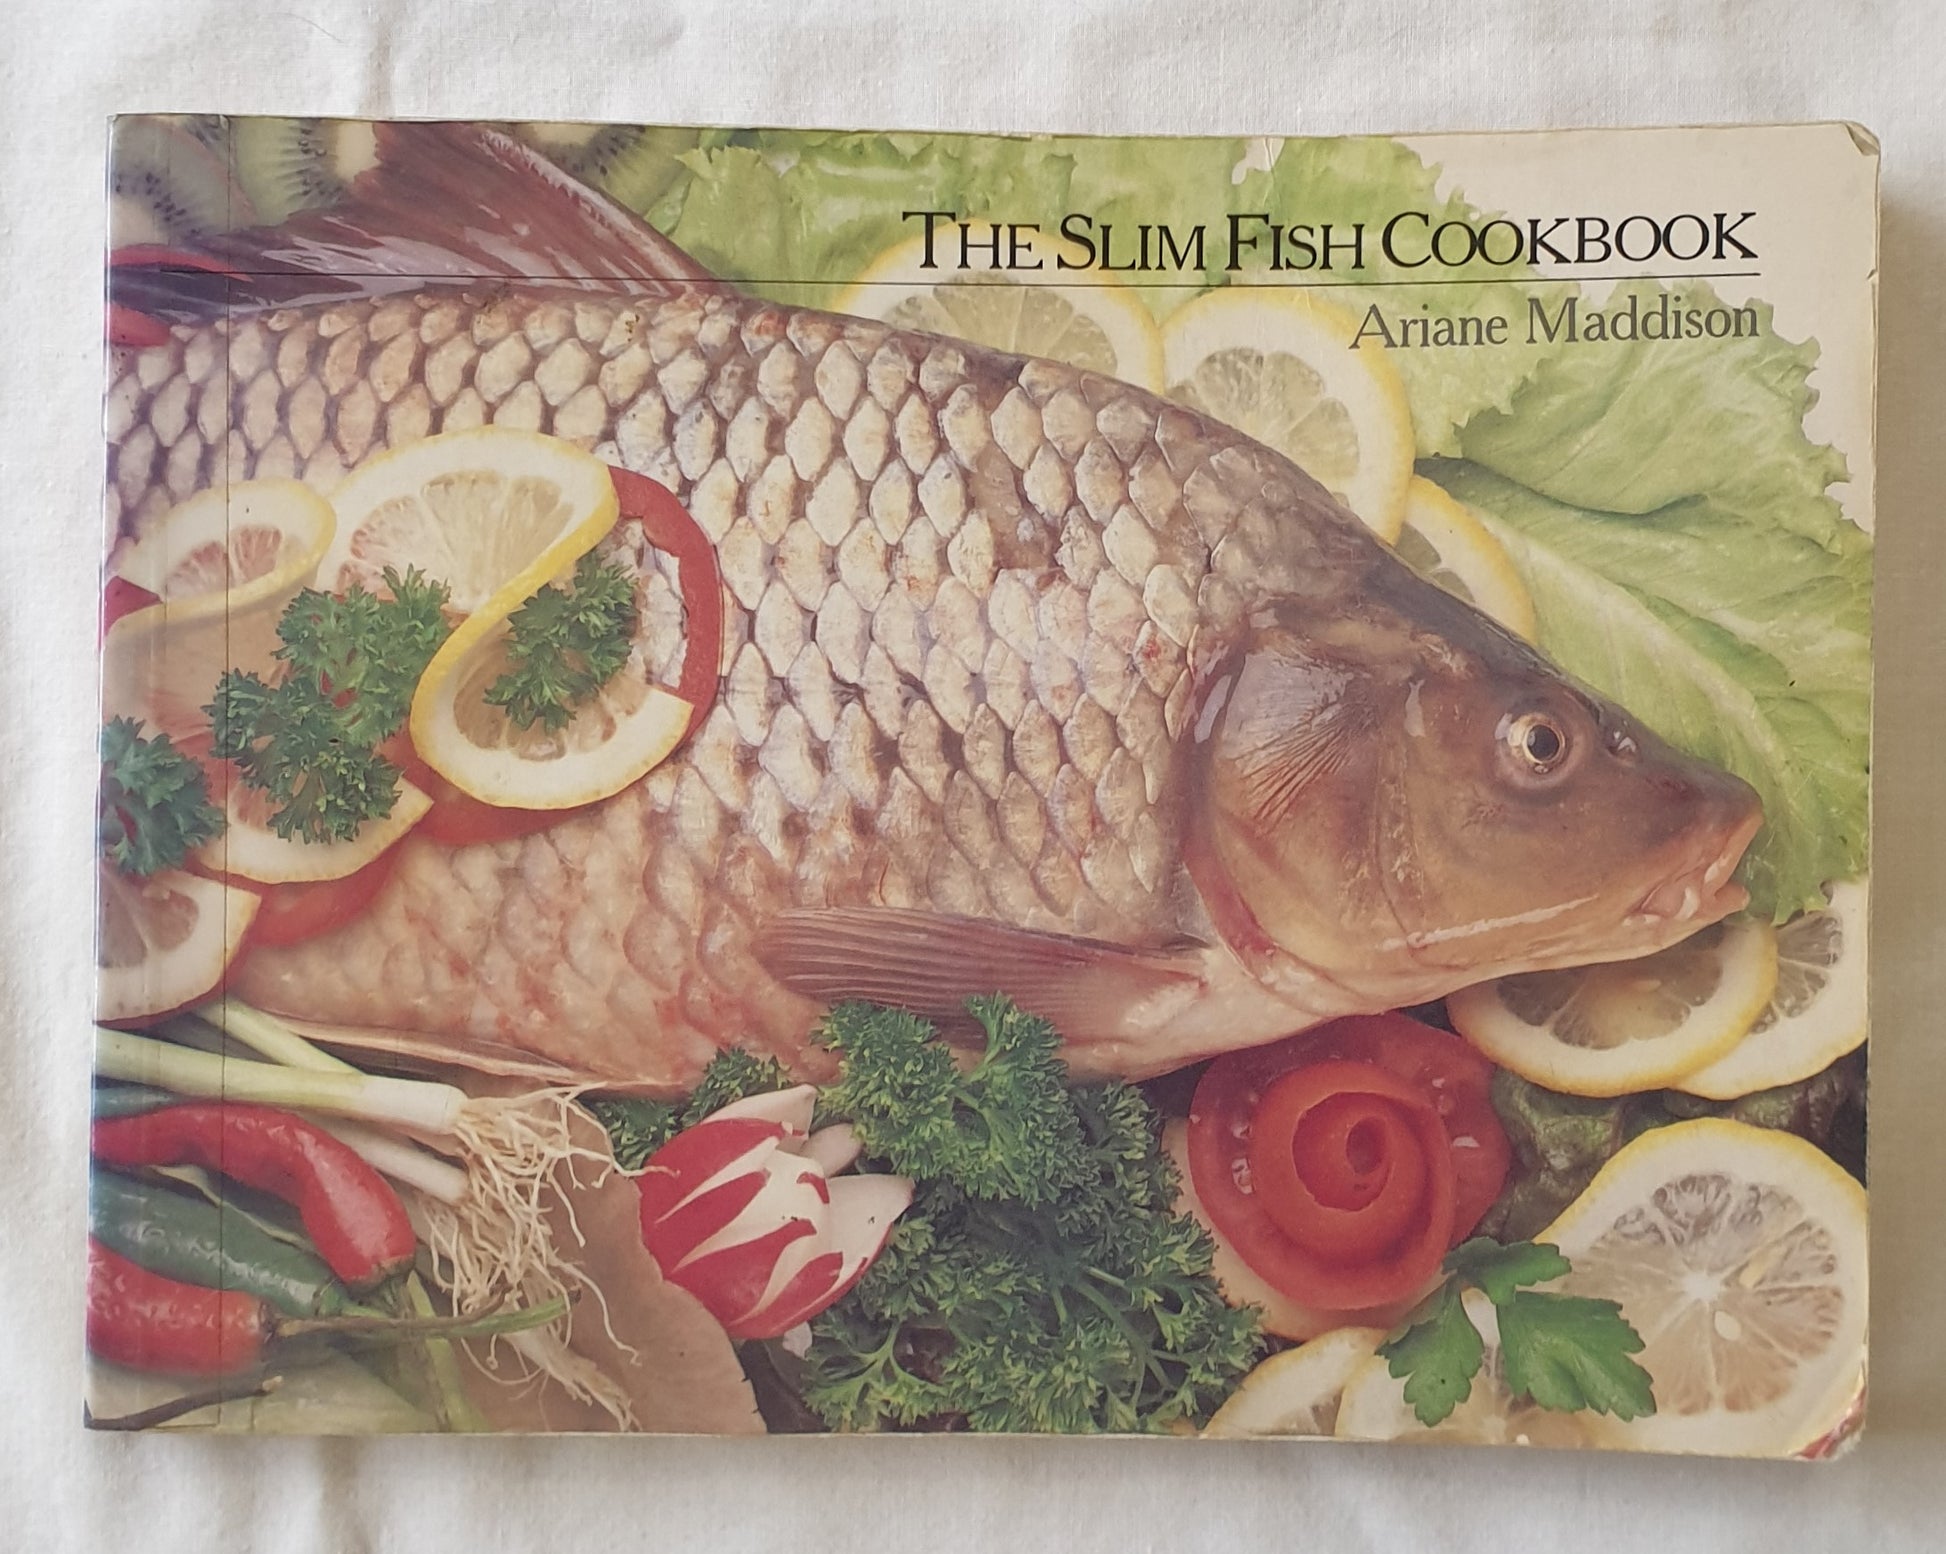 The Slim Fish Cookbook by Ariane Maddison